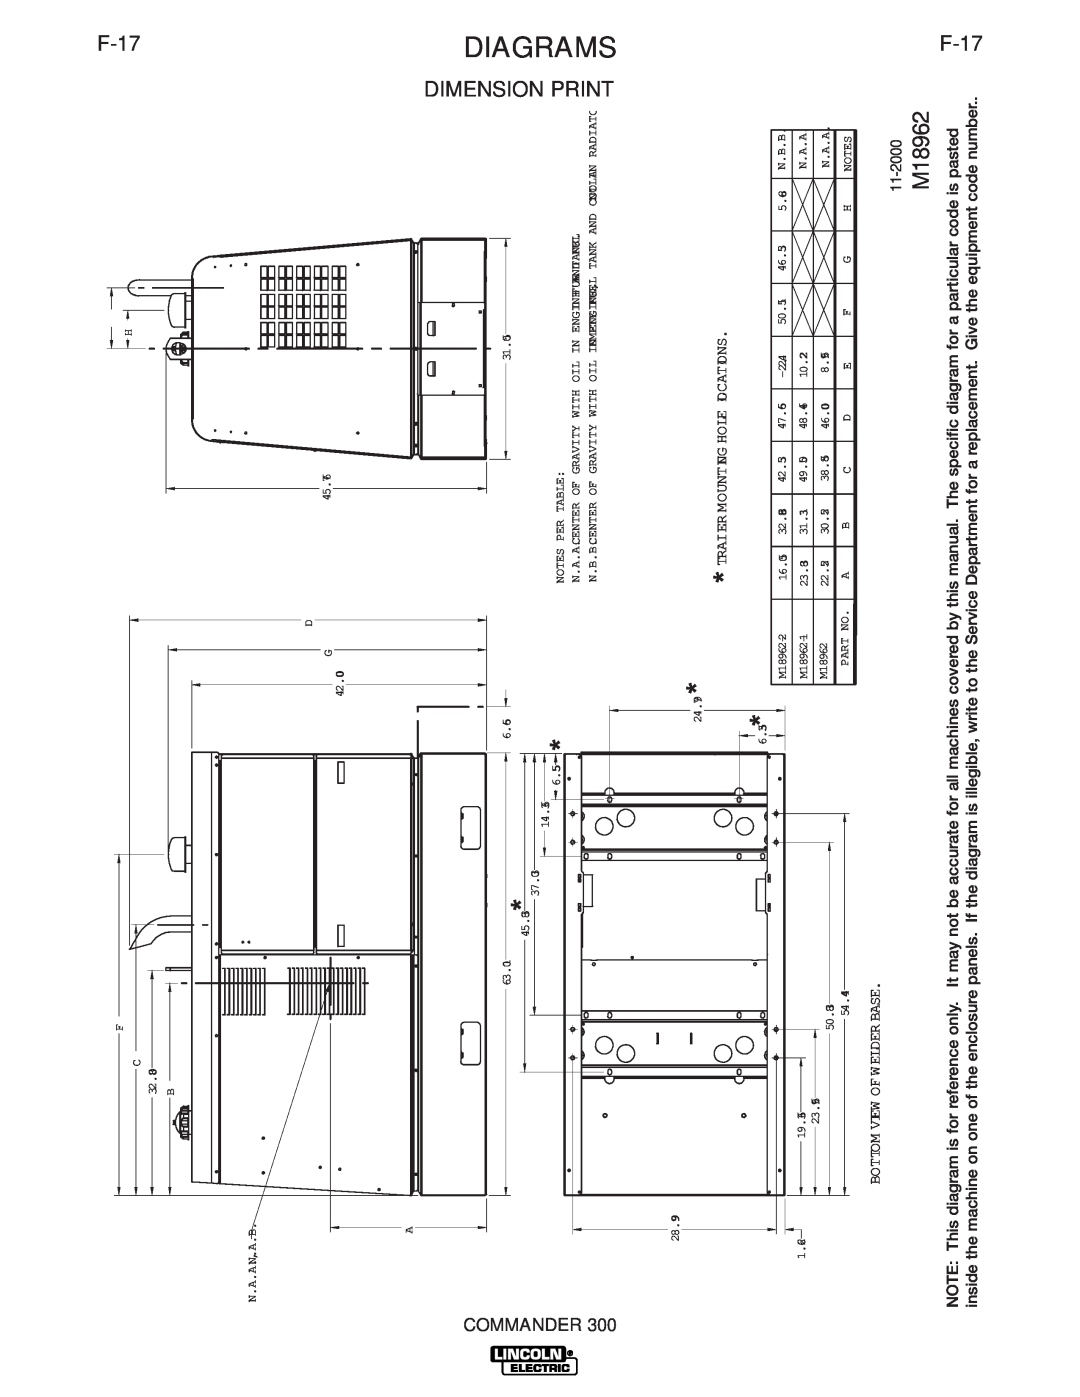 Lincoln Electric IM700-D manual F-17, Dimension Print, 24.79, Diagrams, M18962, Commander, Bottom View Ofwelder Base 